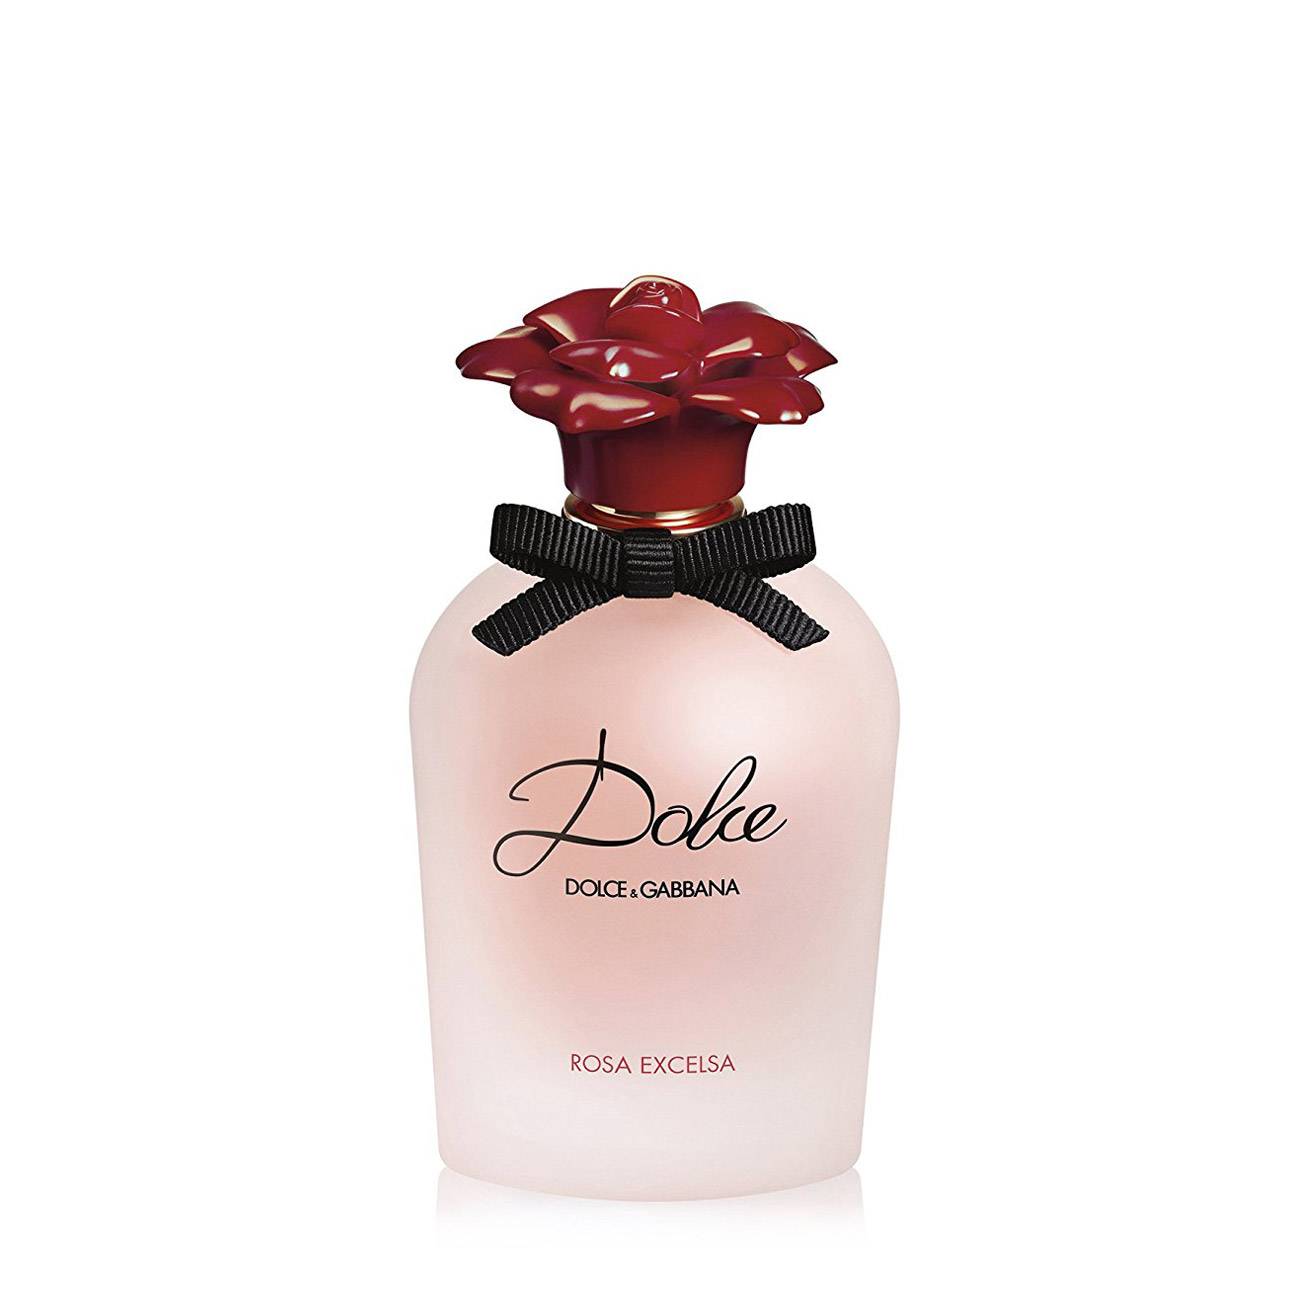 DOLCE ROSA EXCELSA 75ml original Dolce & Gabbana bestvalue